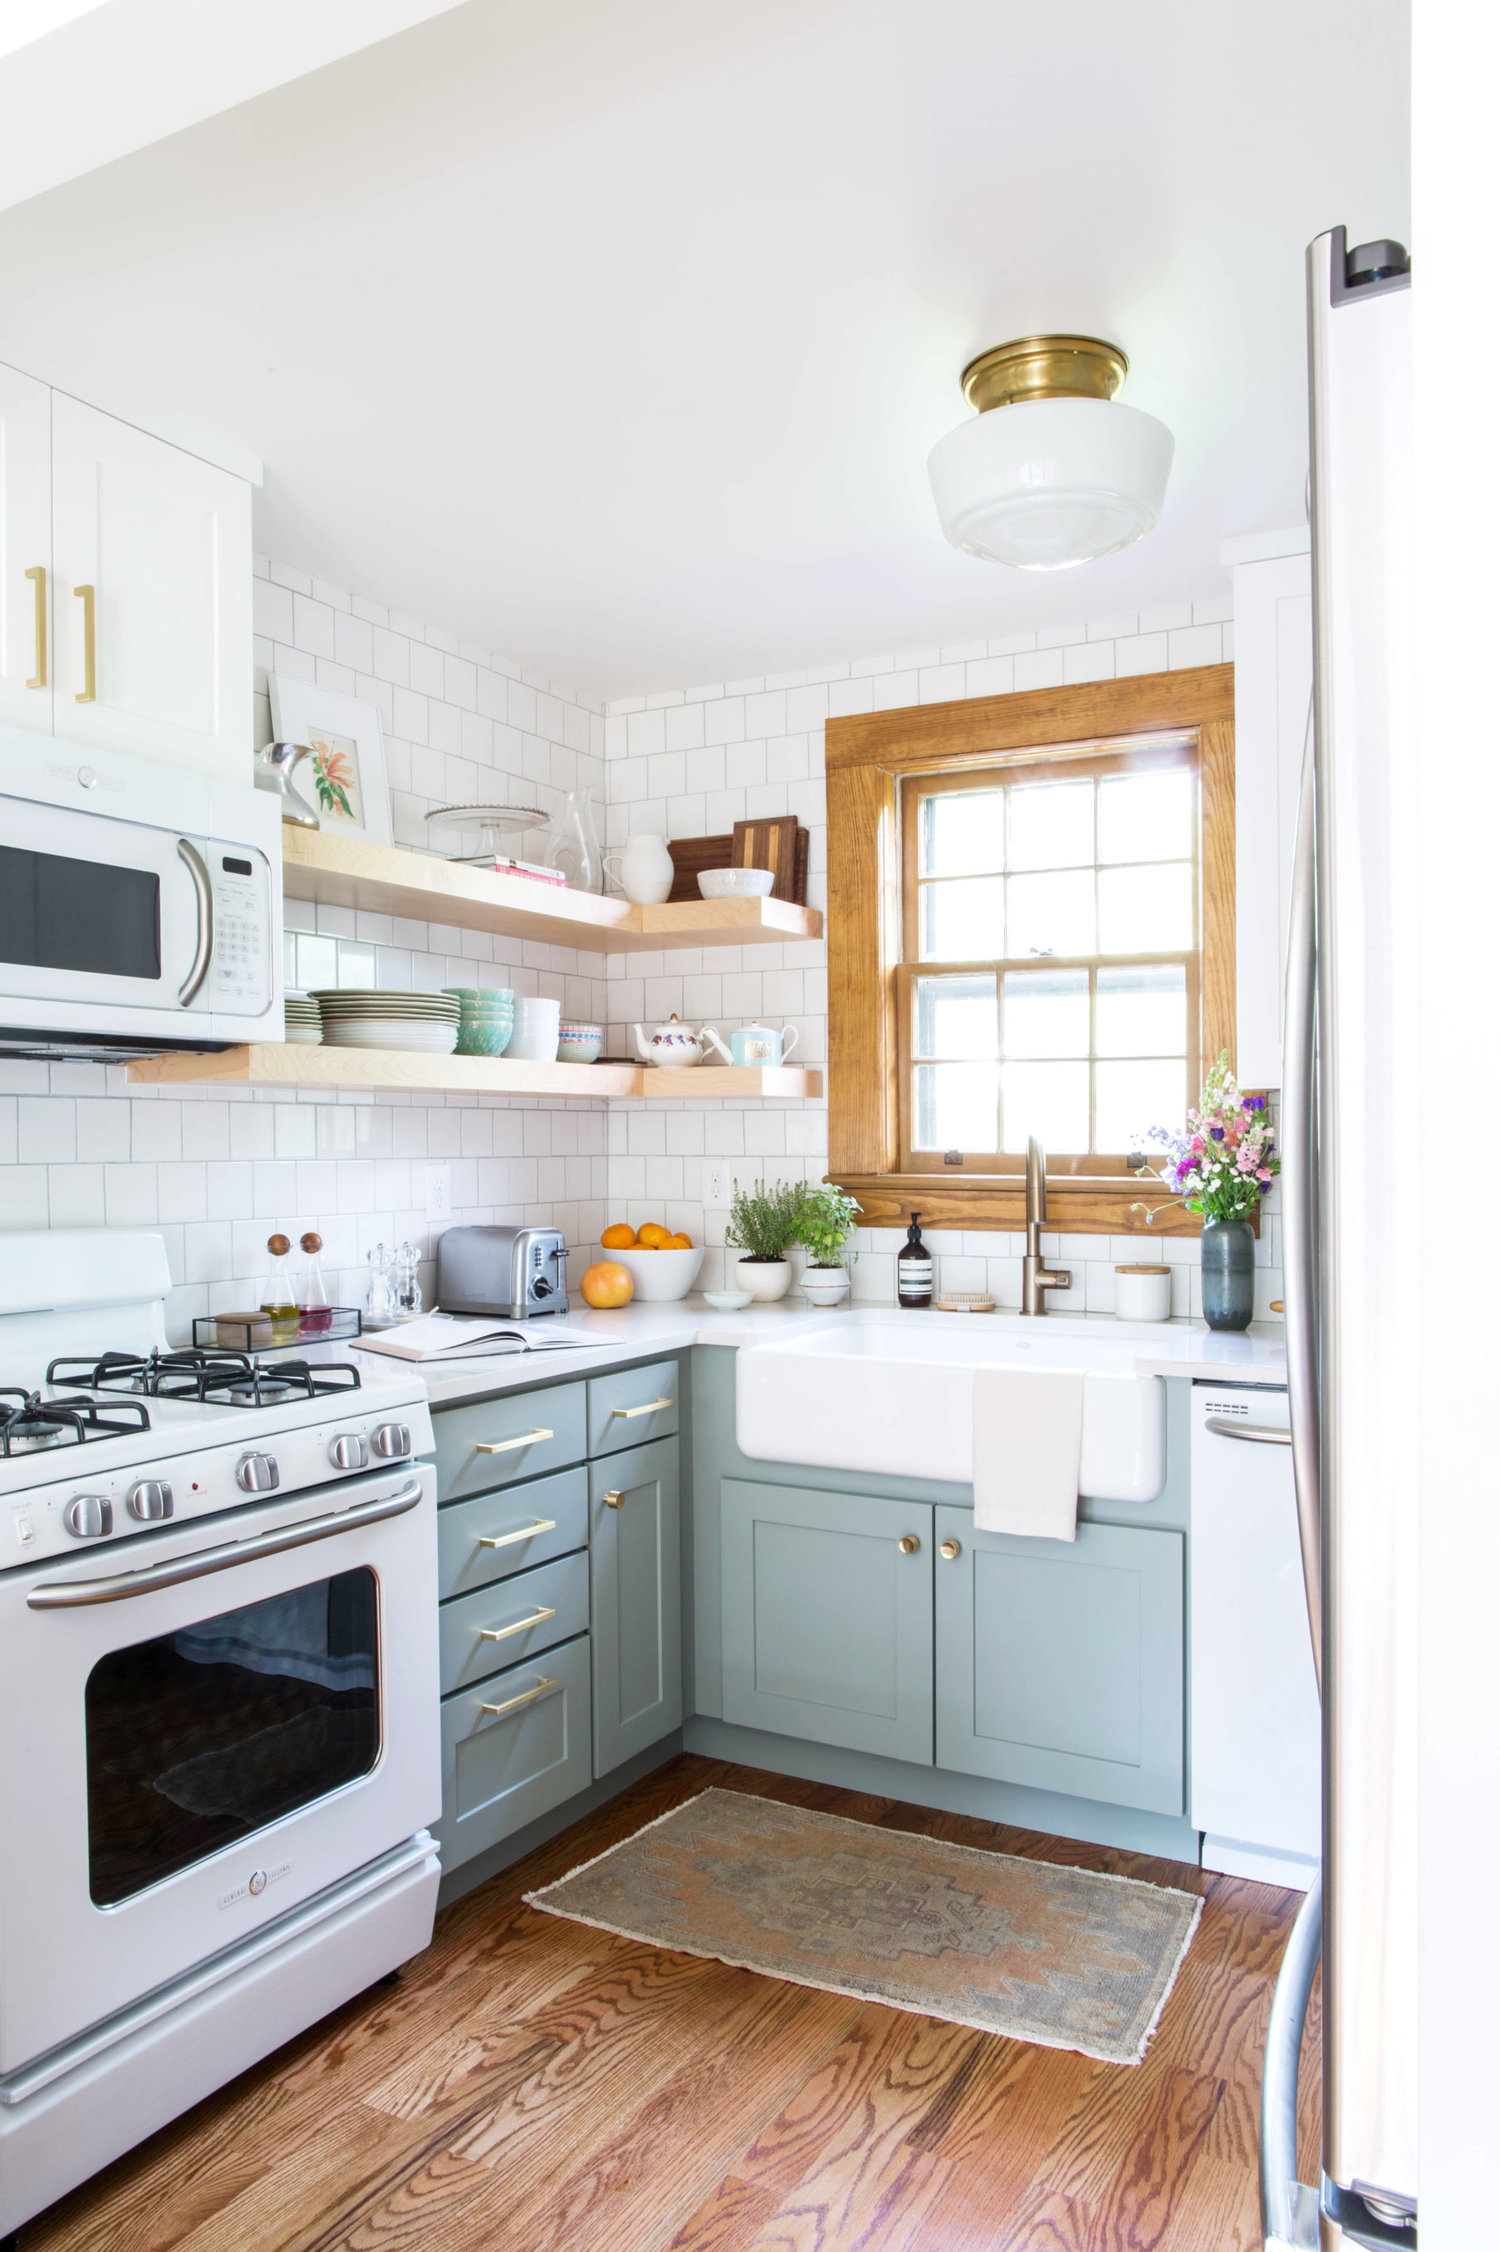 Modern White Kitchen Ideas: Appliances Guide